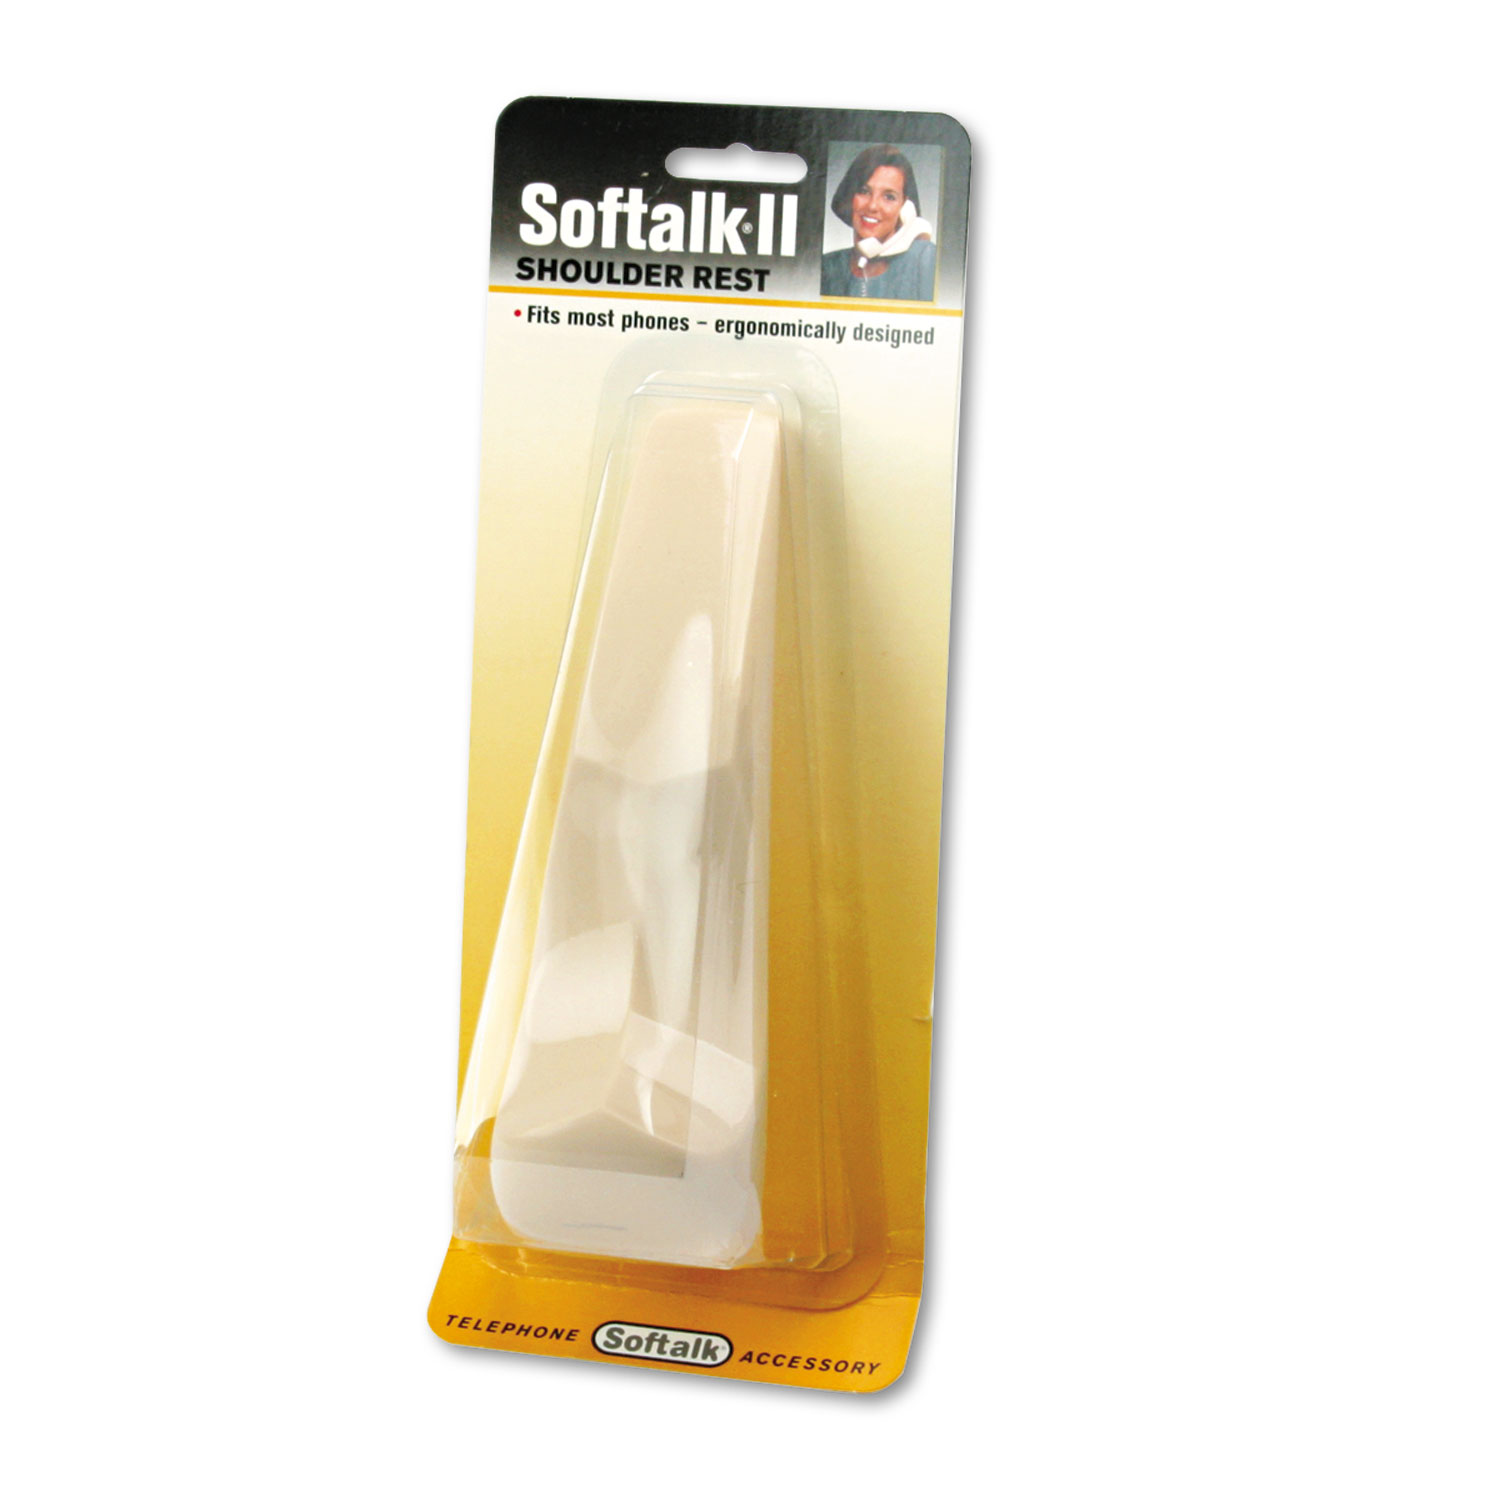  Softalk 00805M Softalk II Telephone Shoulder Rest, 6-1/2 Long x 2w x 2-1/2h, Ivory (SOF805M) 